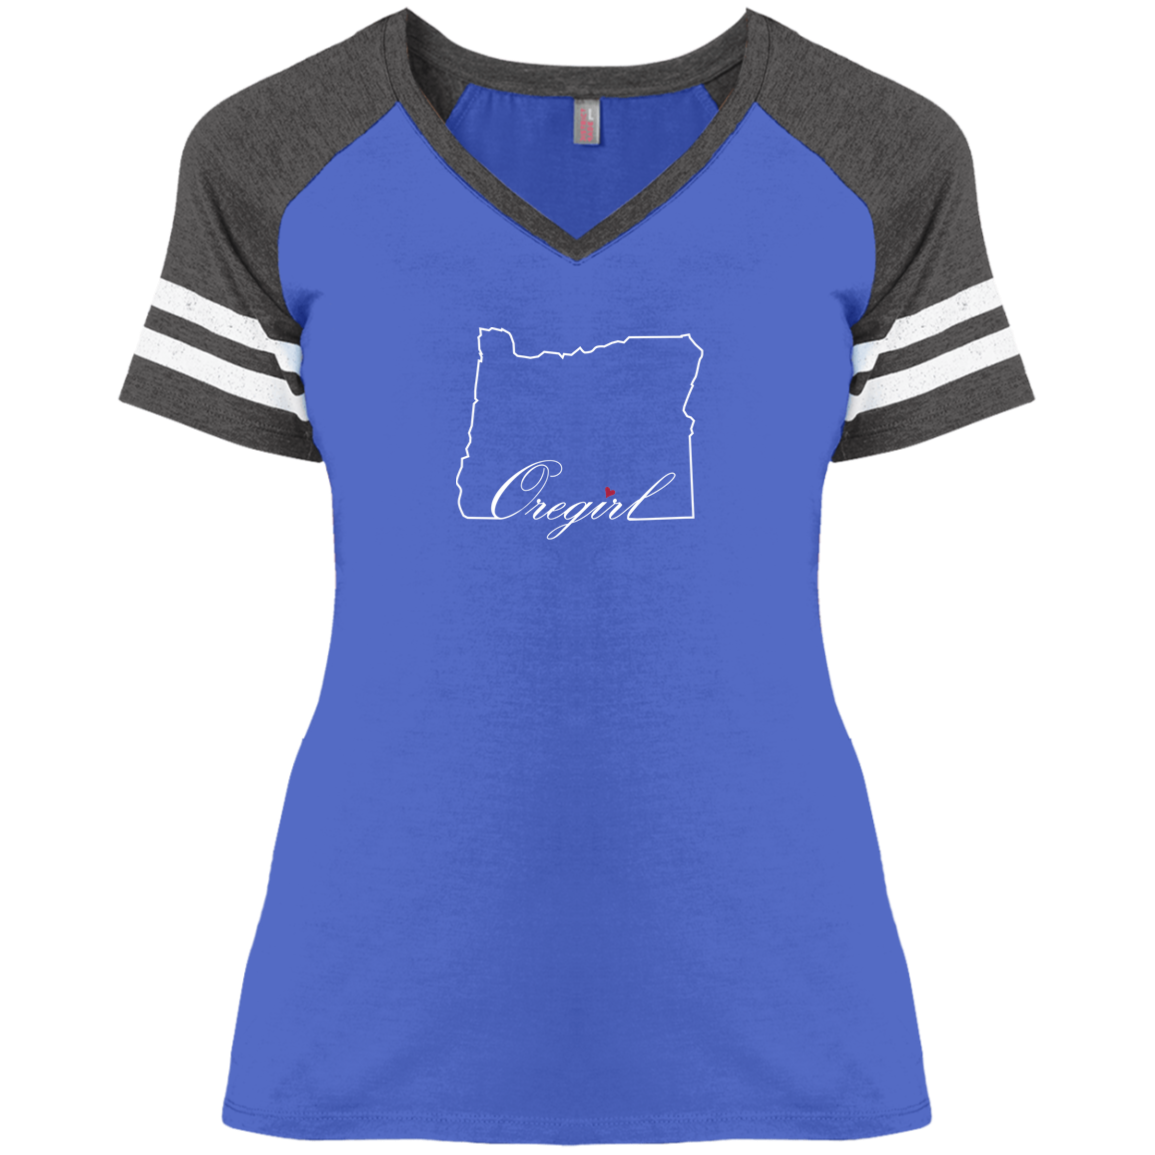 Oregirl Ladies' Game V-Neck T-Shirt - State Outline